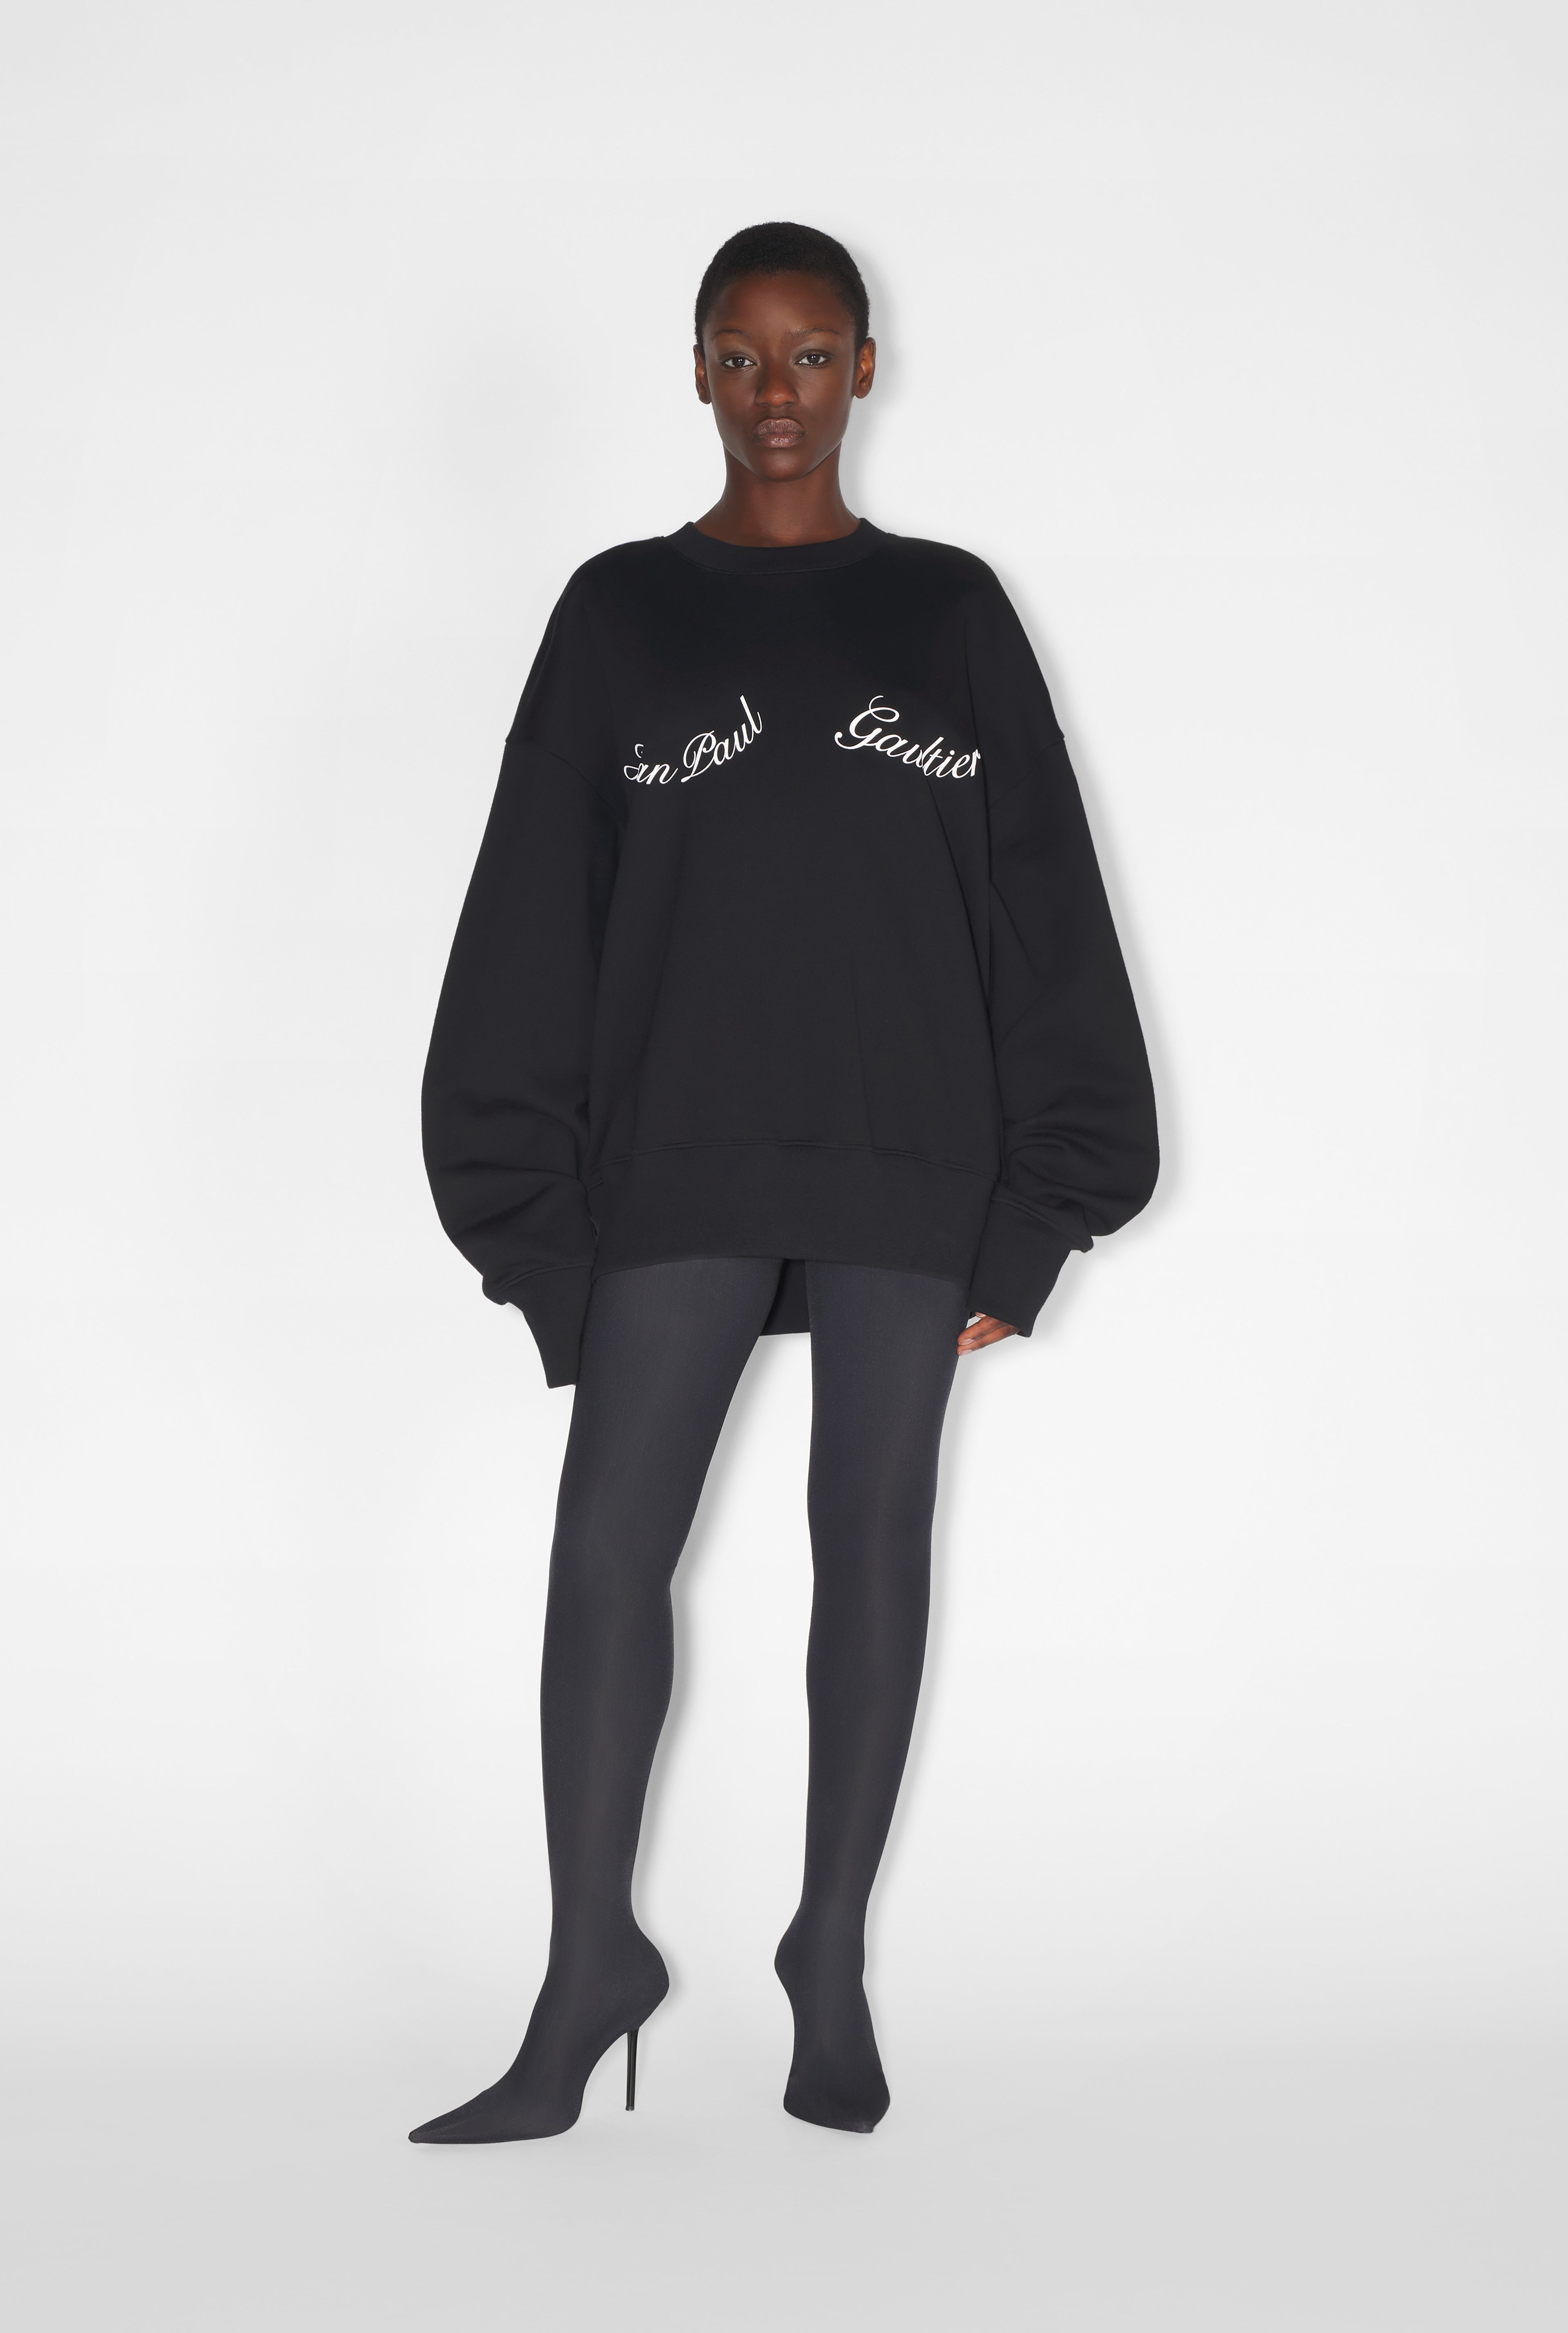 The Black Jean Paul Gaultier Sweatshirt